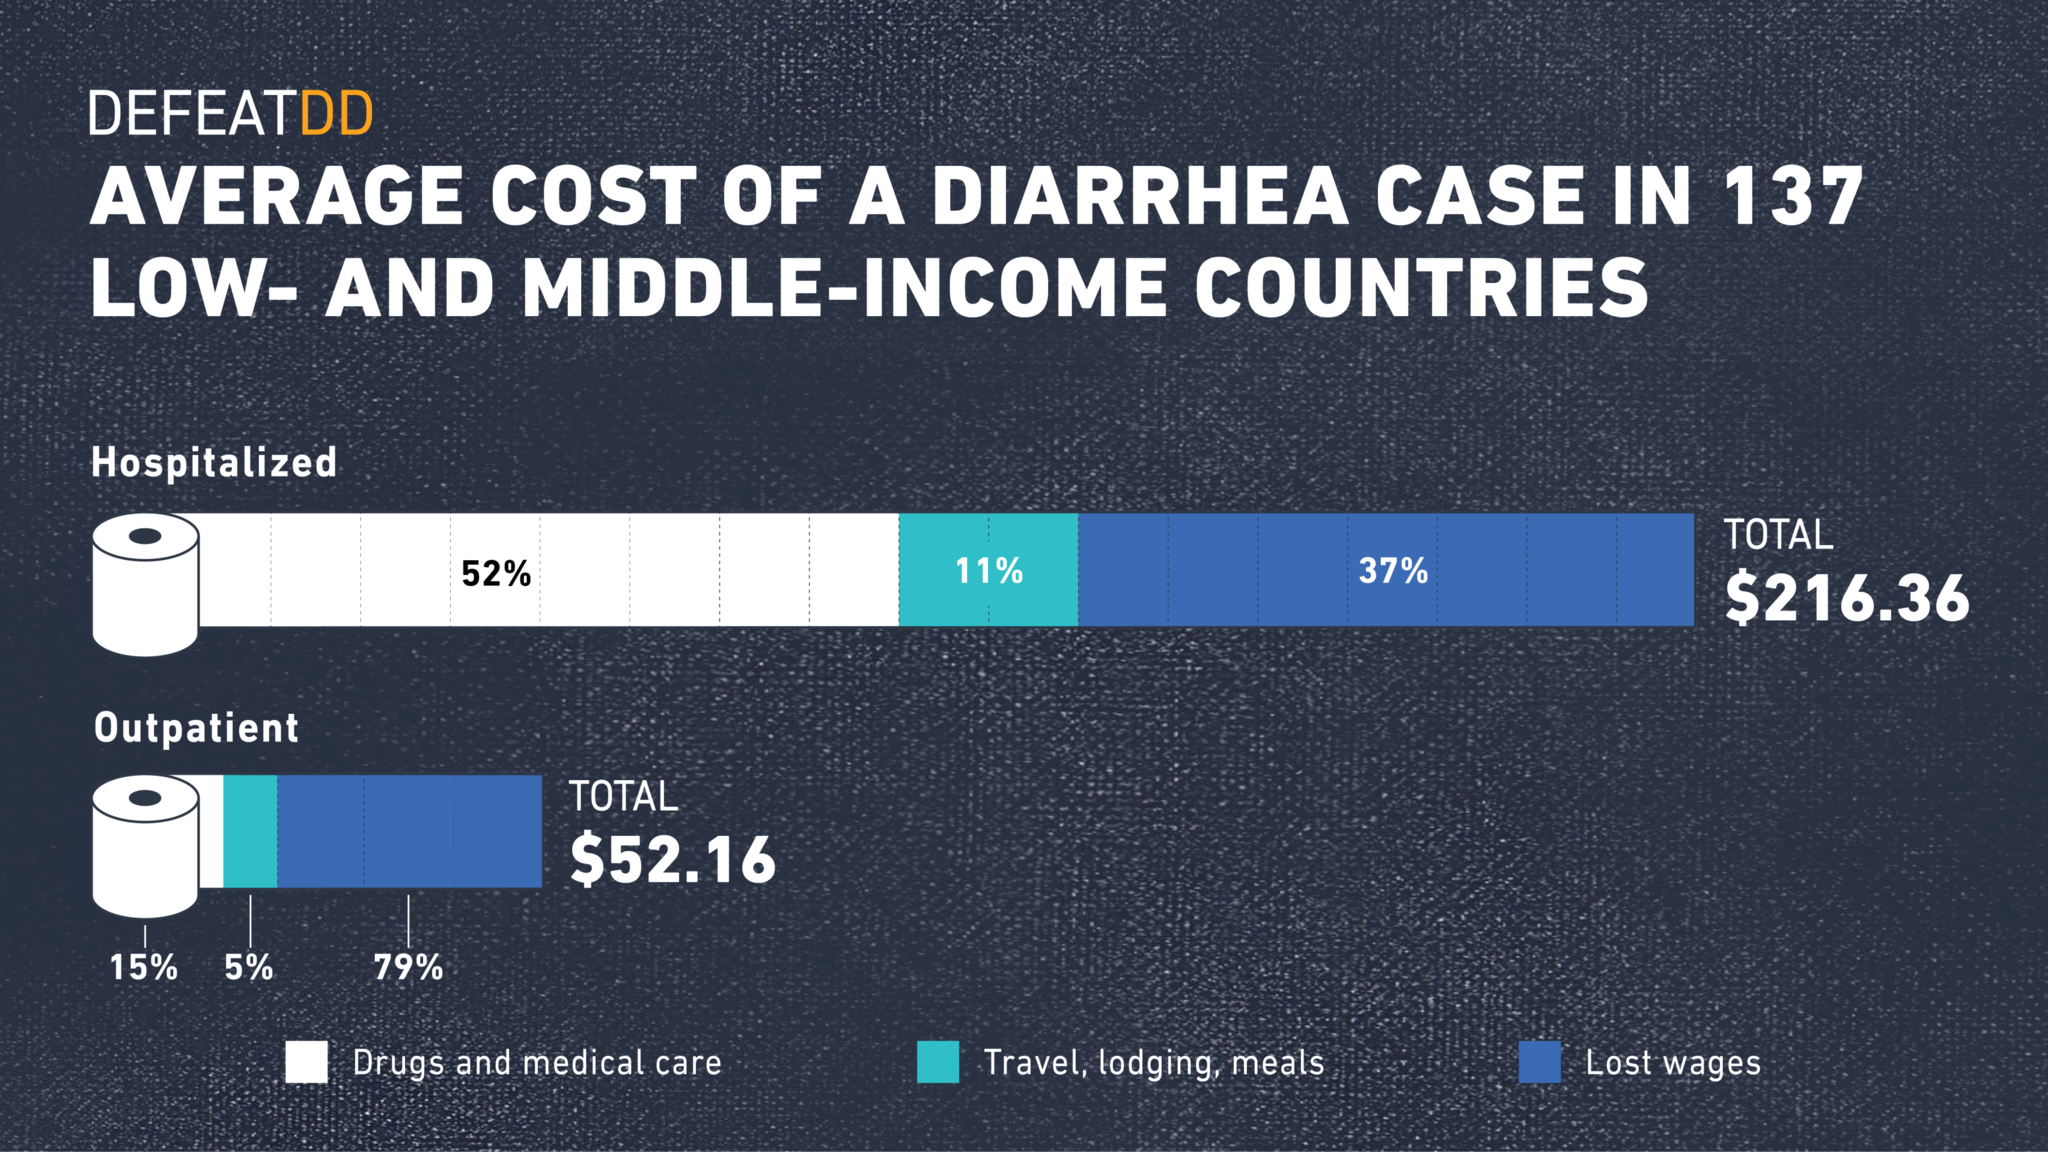 Bar chart showing average cost of diarrhea